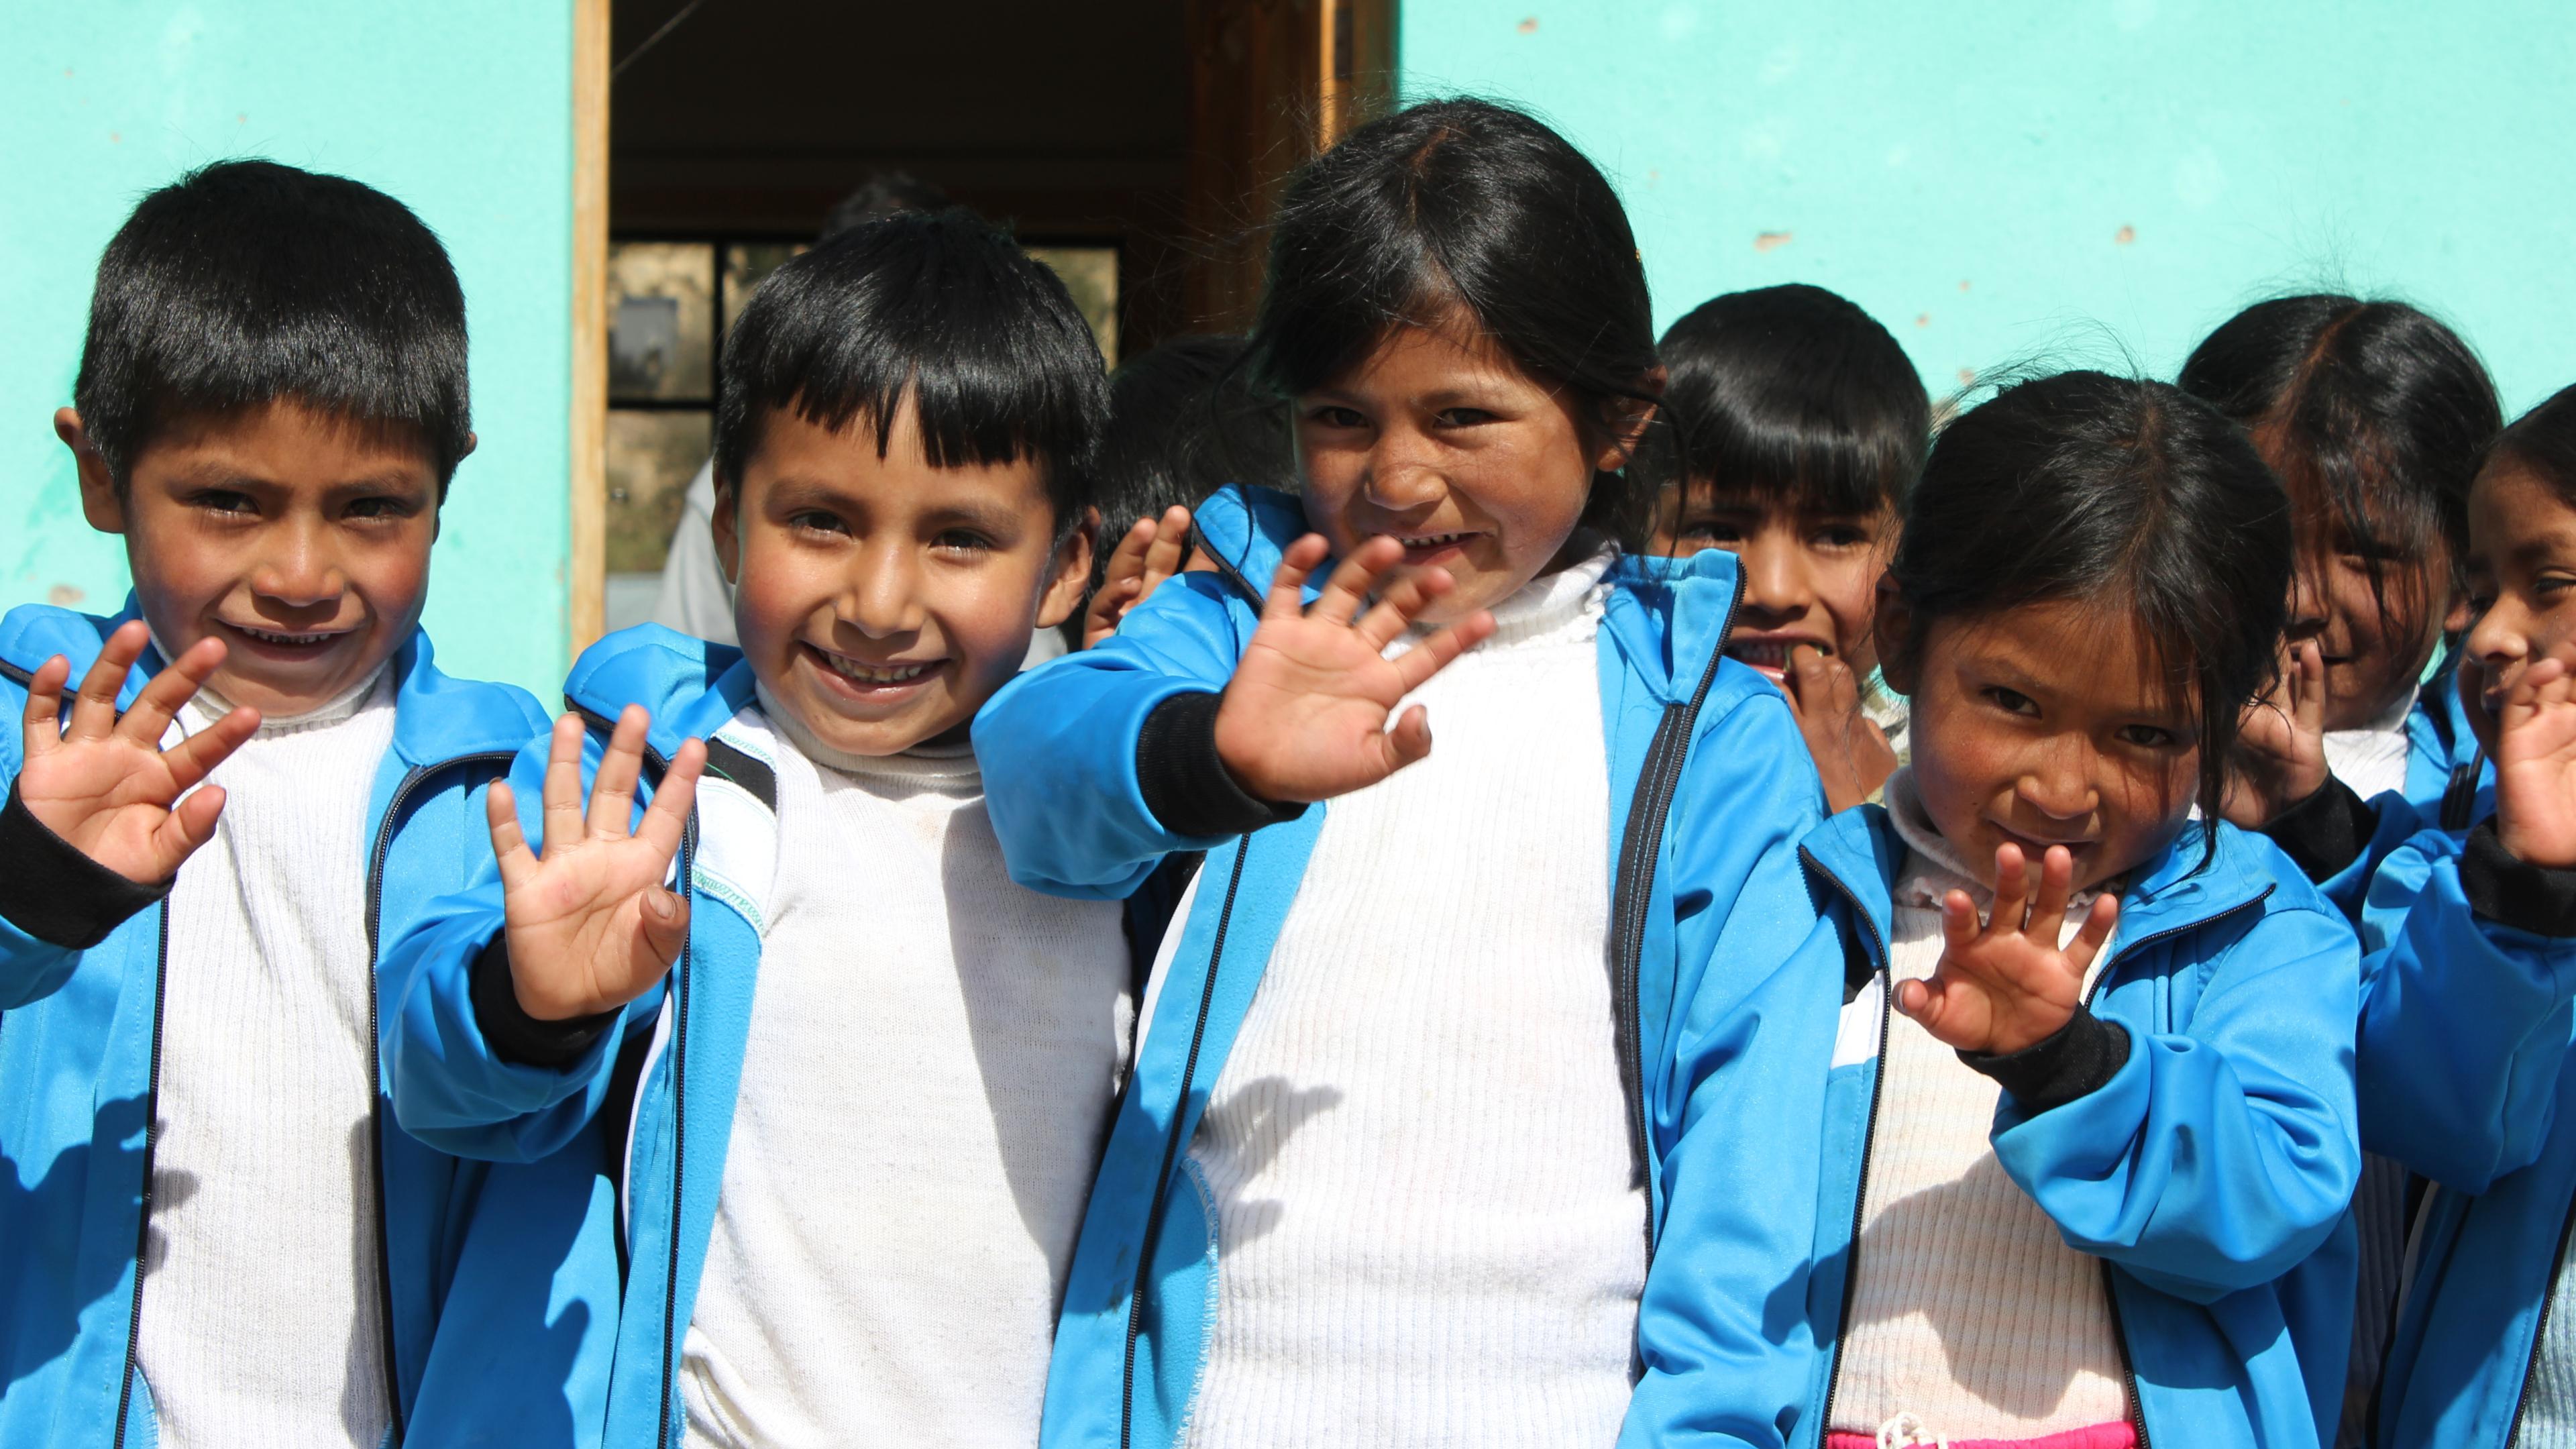 Bolivian schoolchildren wave and laugh